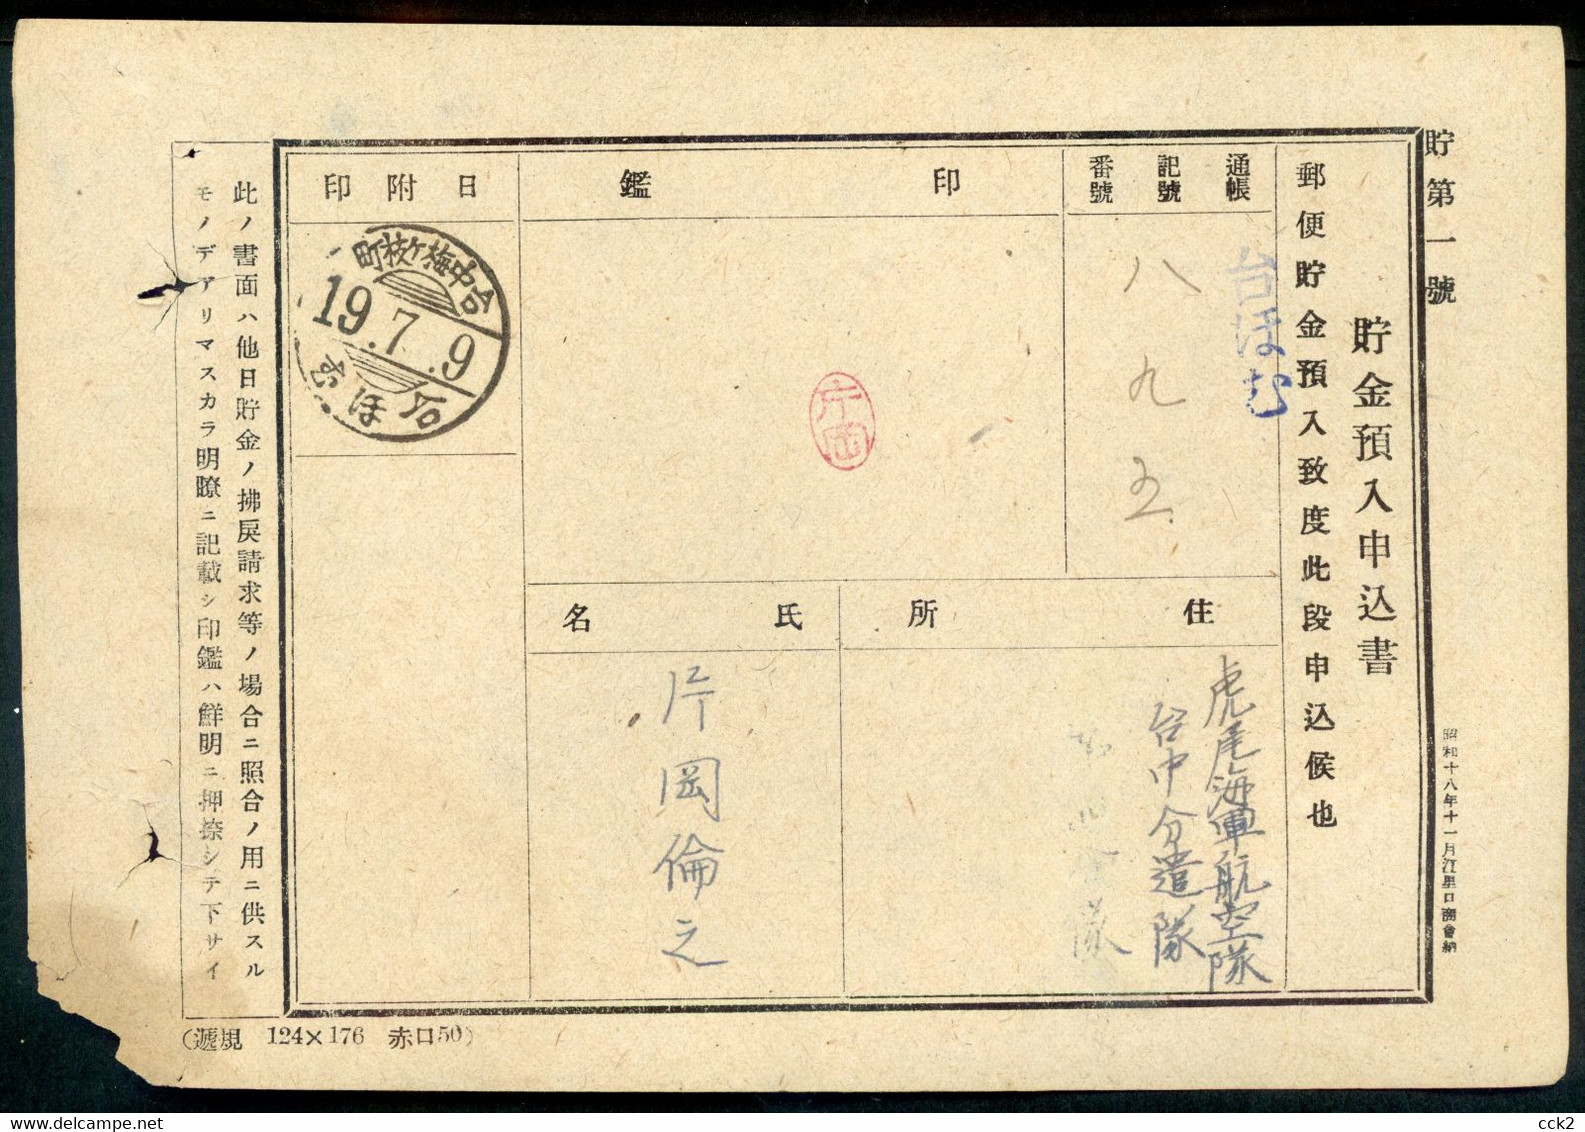 JAPAN OCCUPATION TAIWAN- Postal Convenience Savings Fund Advance Deposit Application Form (2) - 1945 Ocupacion Japonesa